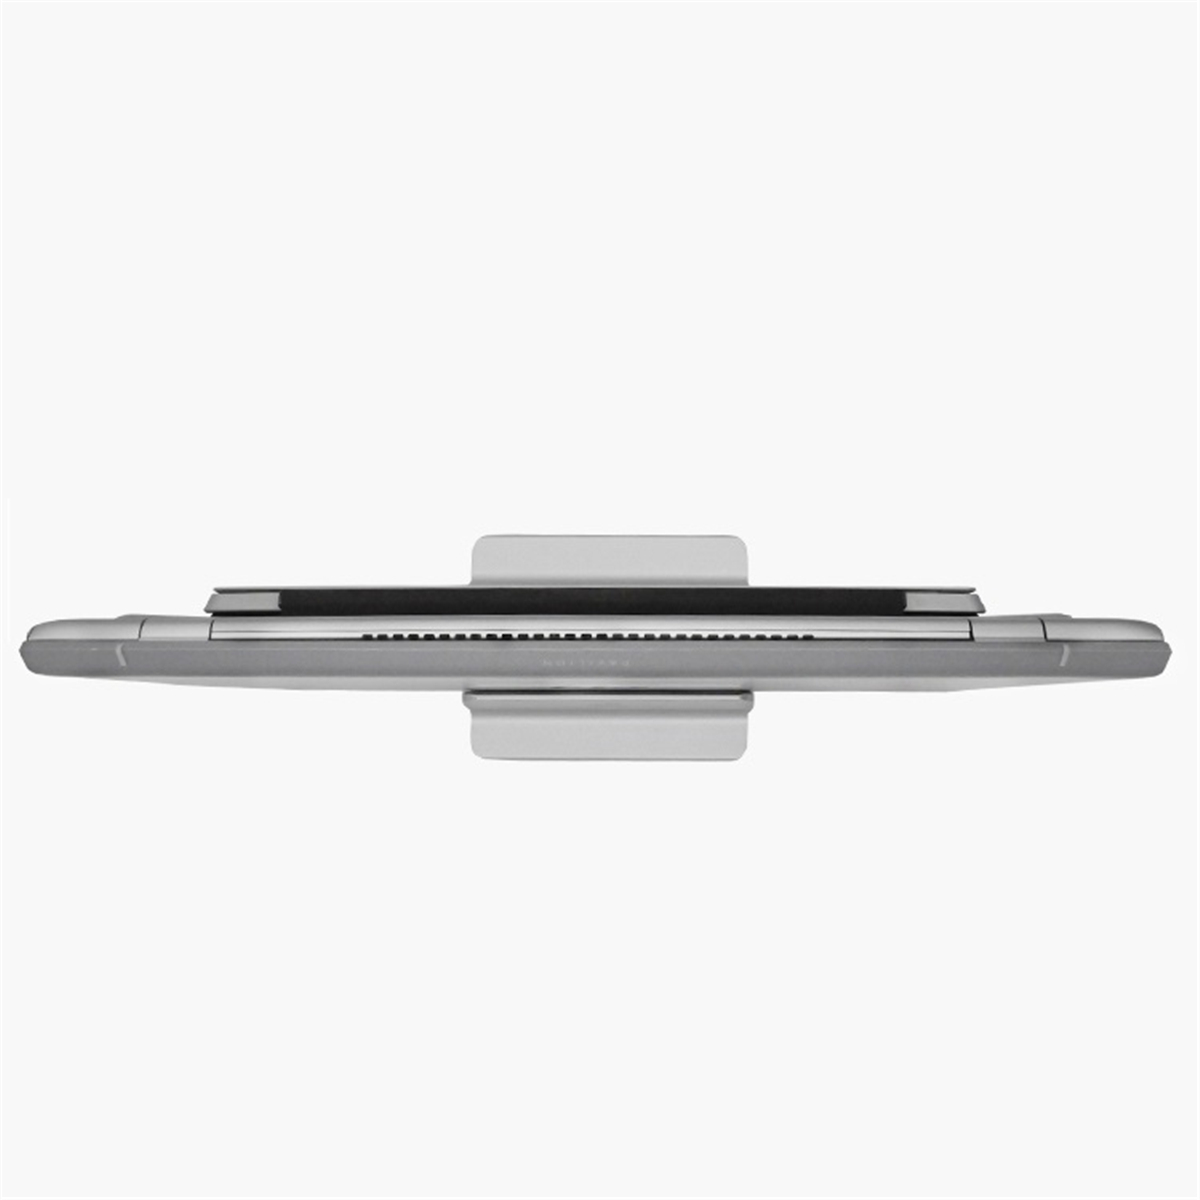 Adjustable-Vertical-Laptop-Stand-Space-saving-Desktop-Holder-For-Laptop-Notebook-MacBook-1383373-9